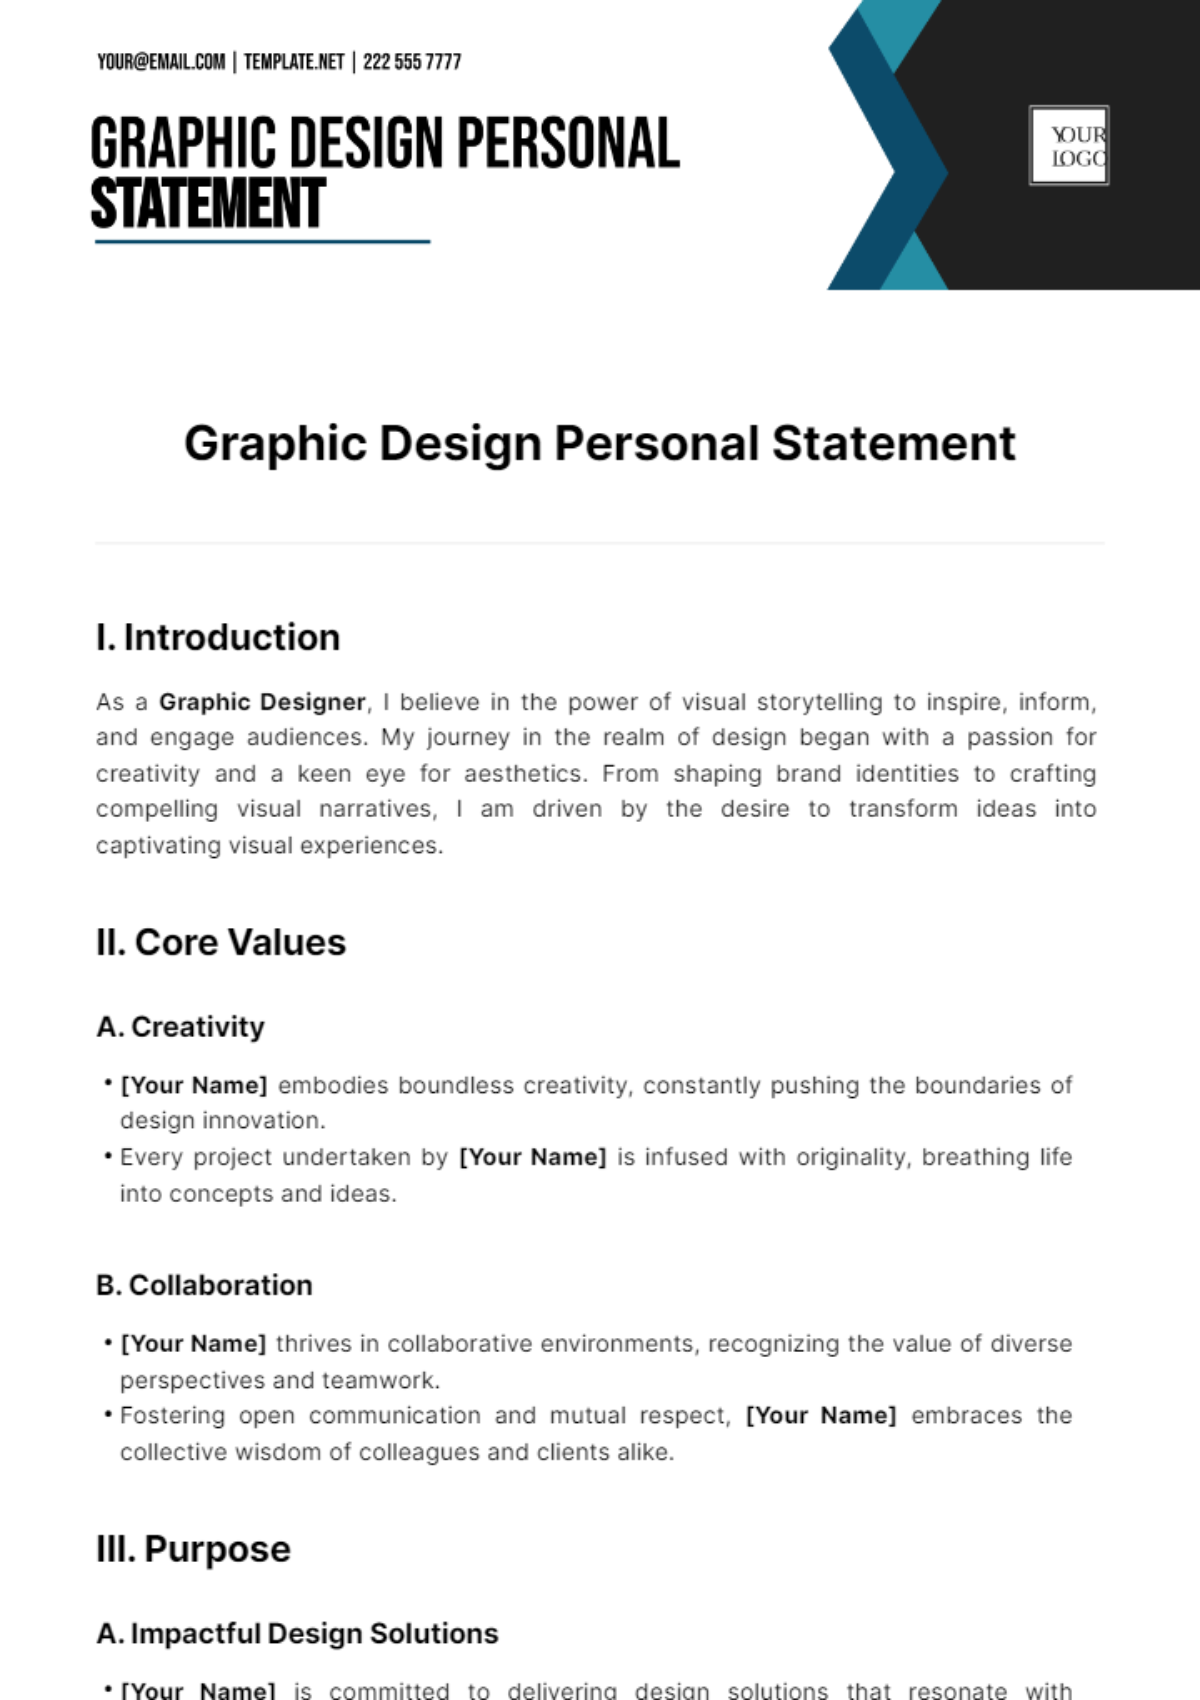 Graphic Design Personal Statement Template